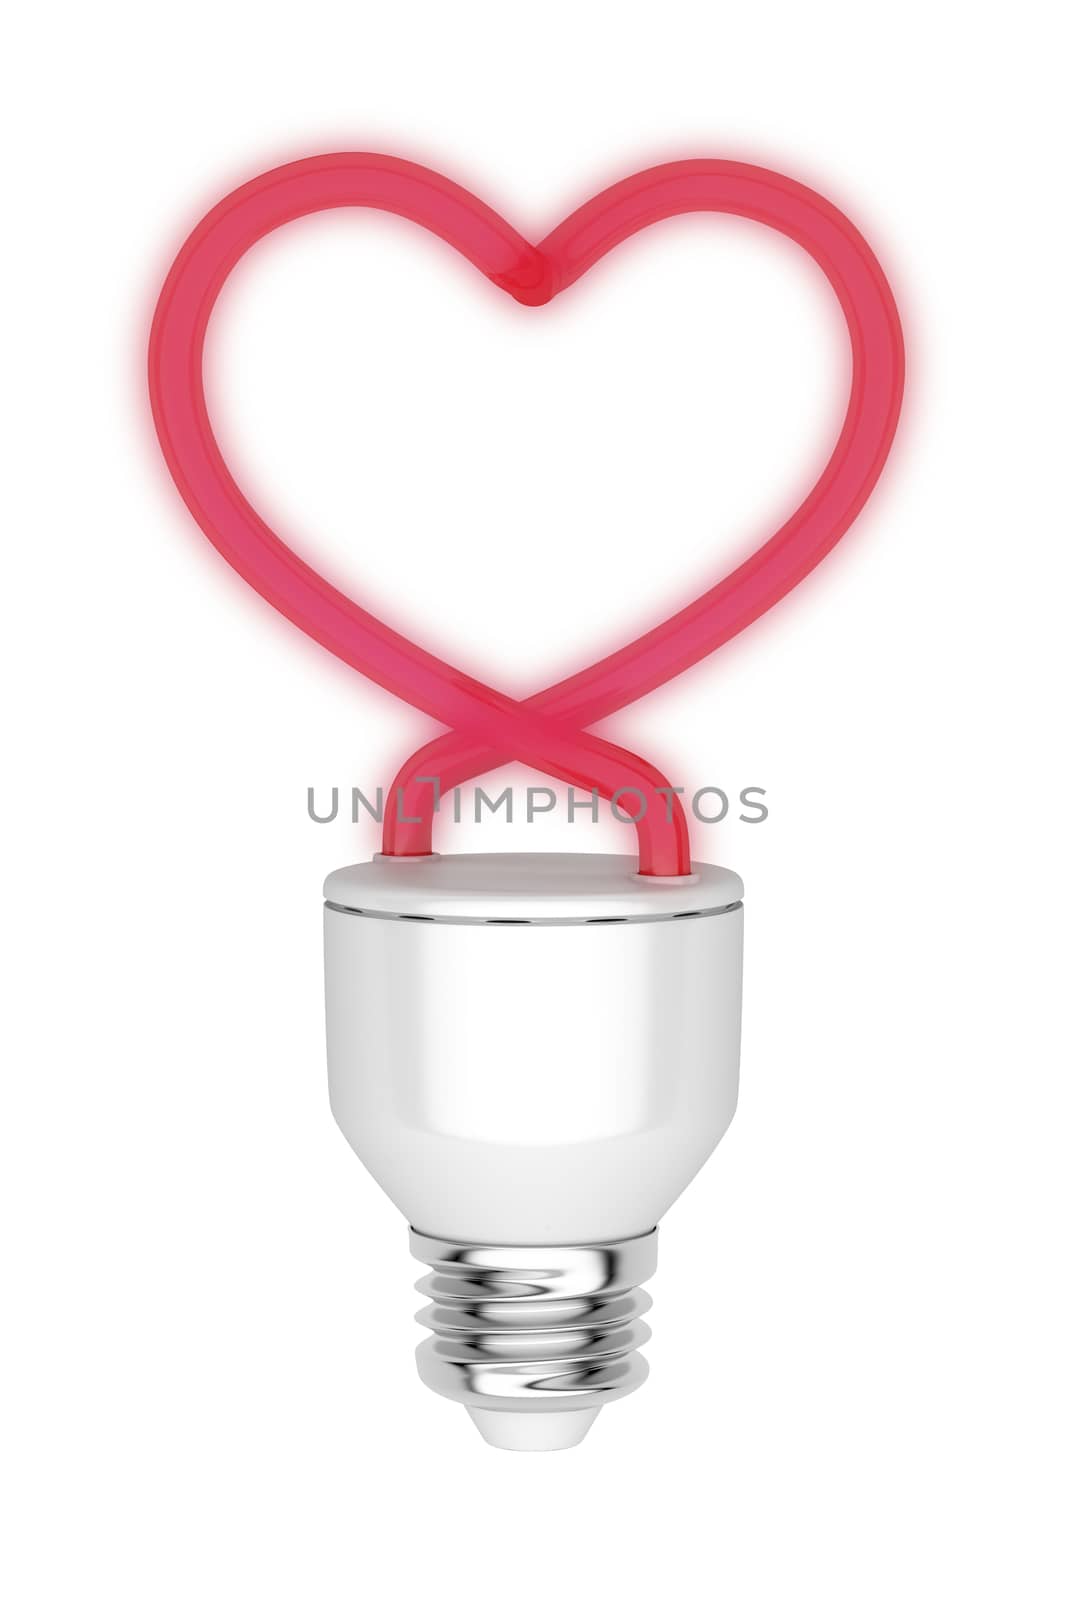 Red fluorescent light bulb in a heart shape